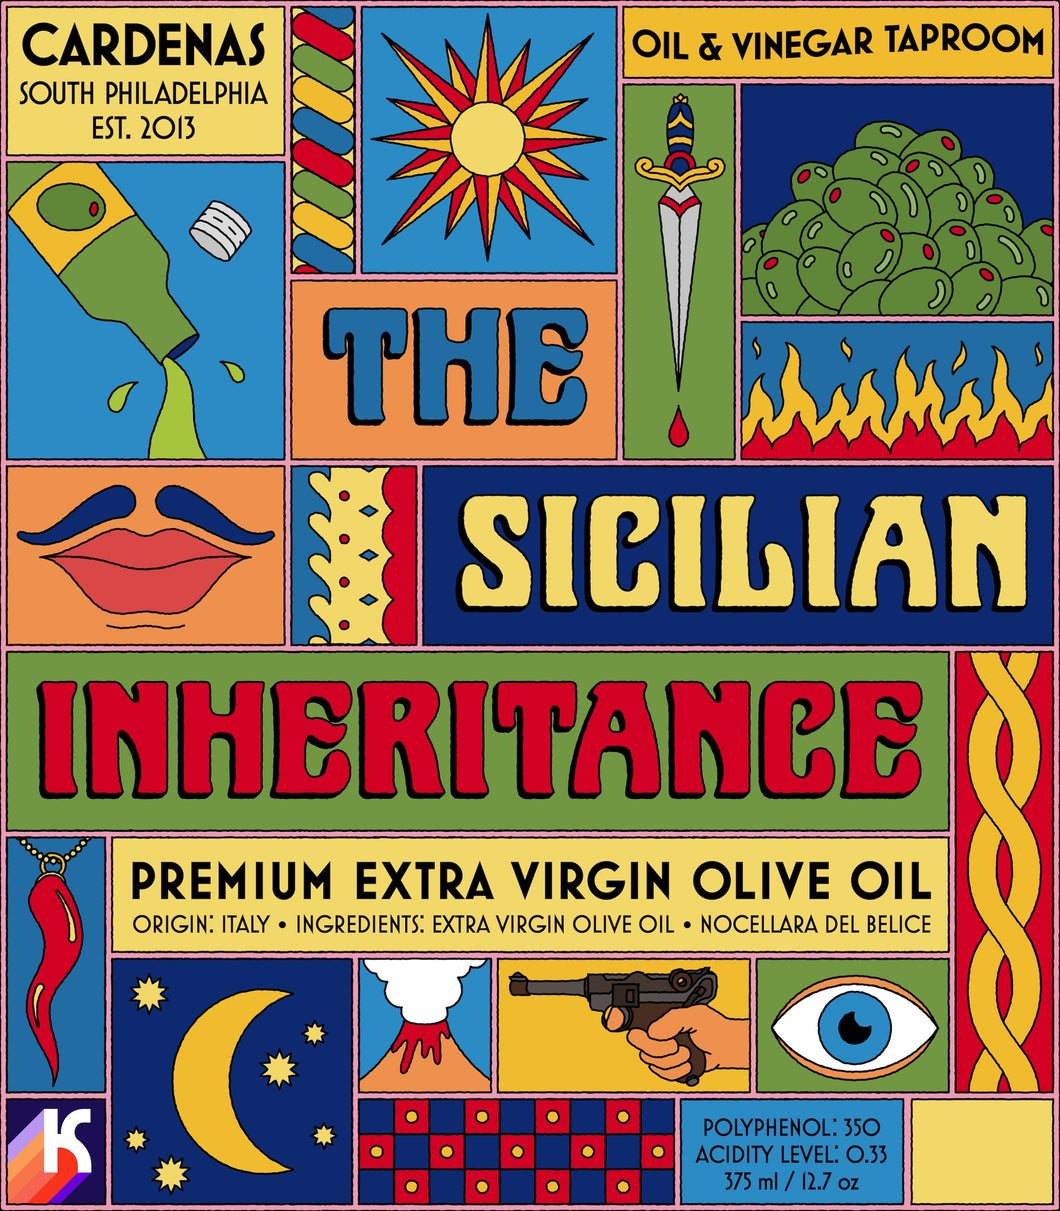 Sicilian Inheritance Extra Virgin Olive Oil